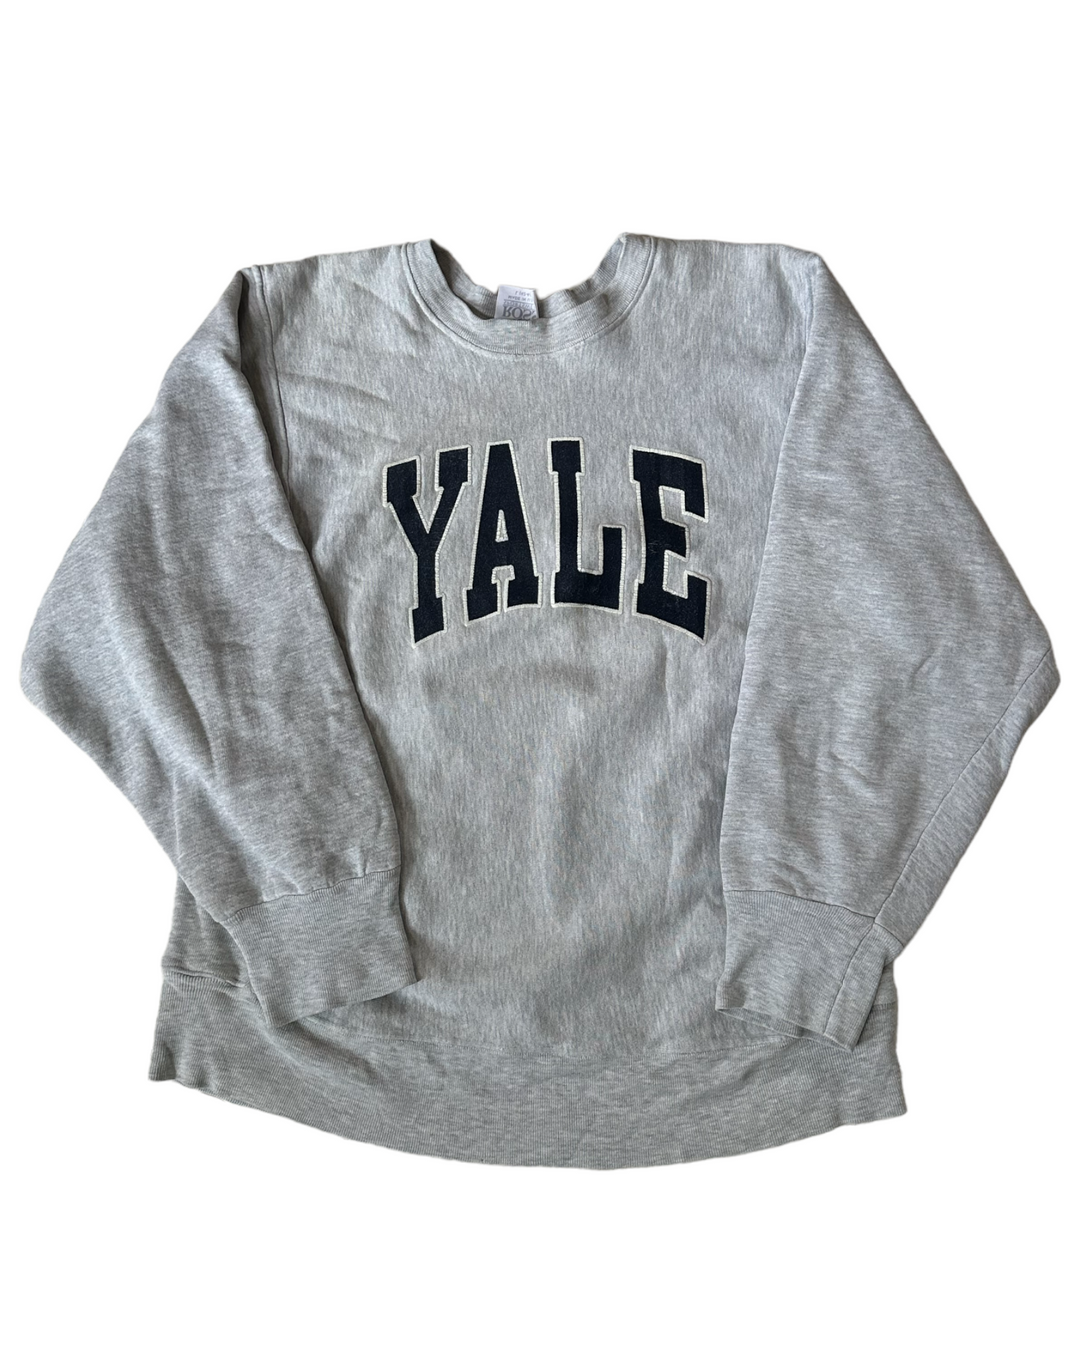 Yale Vintage 80s Sweatshirt